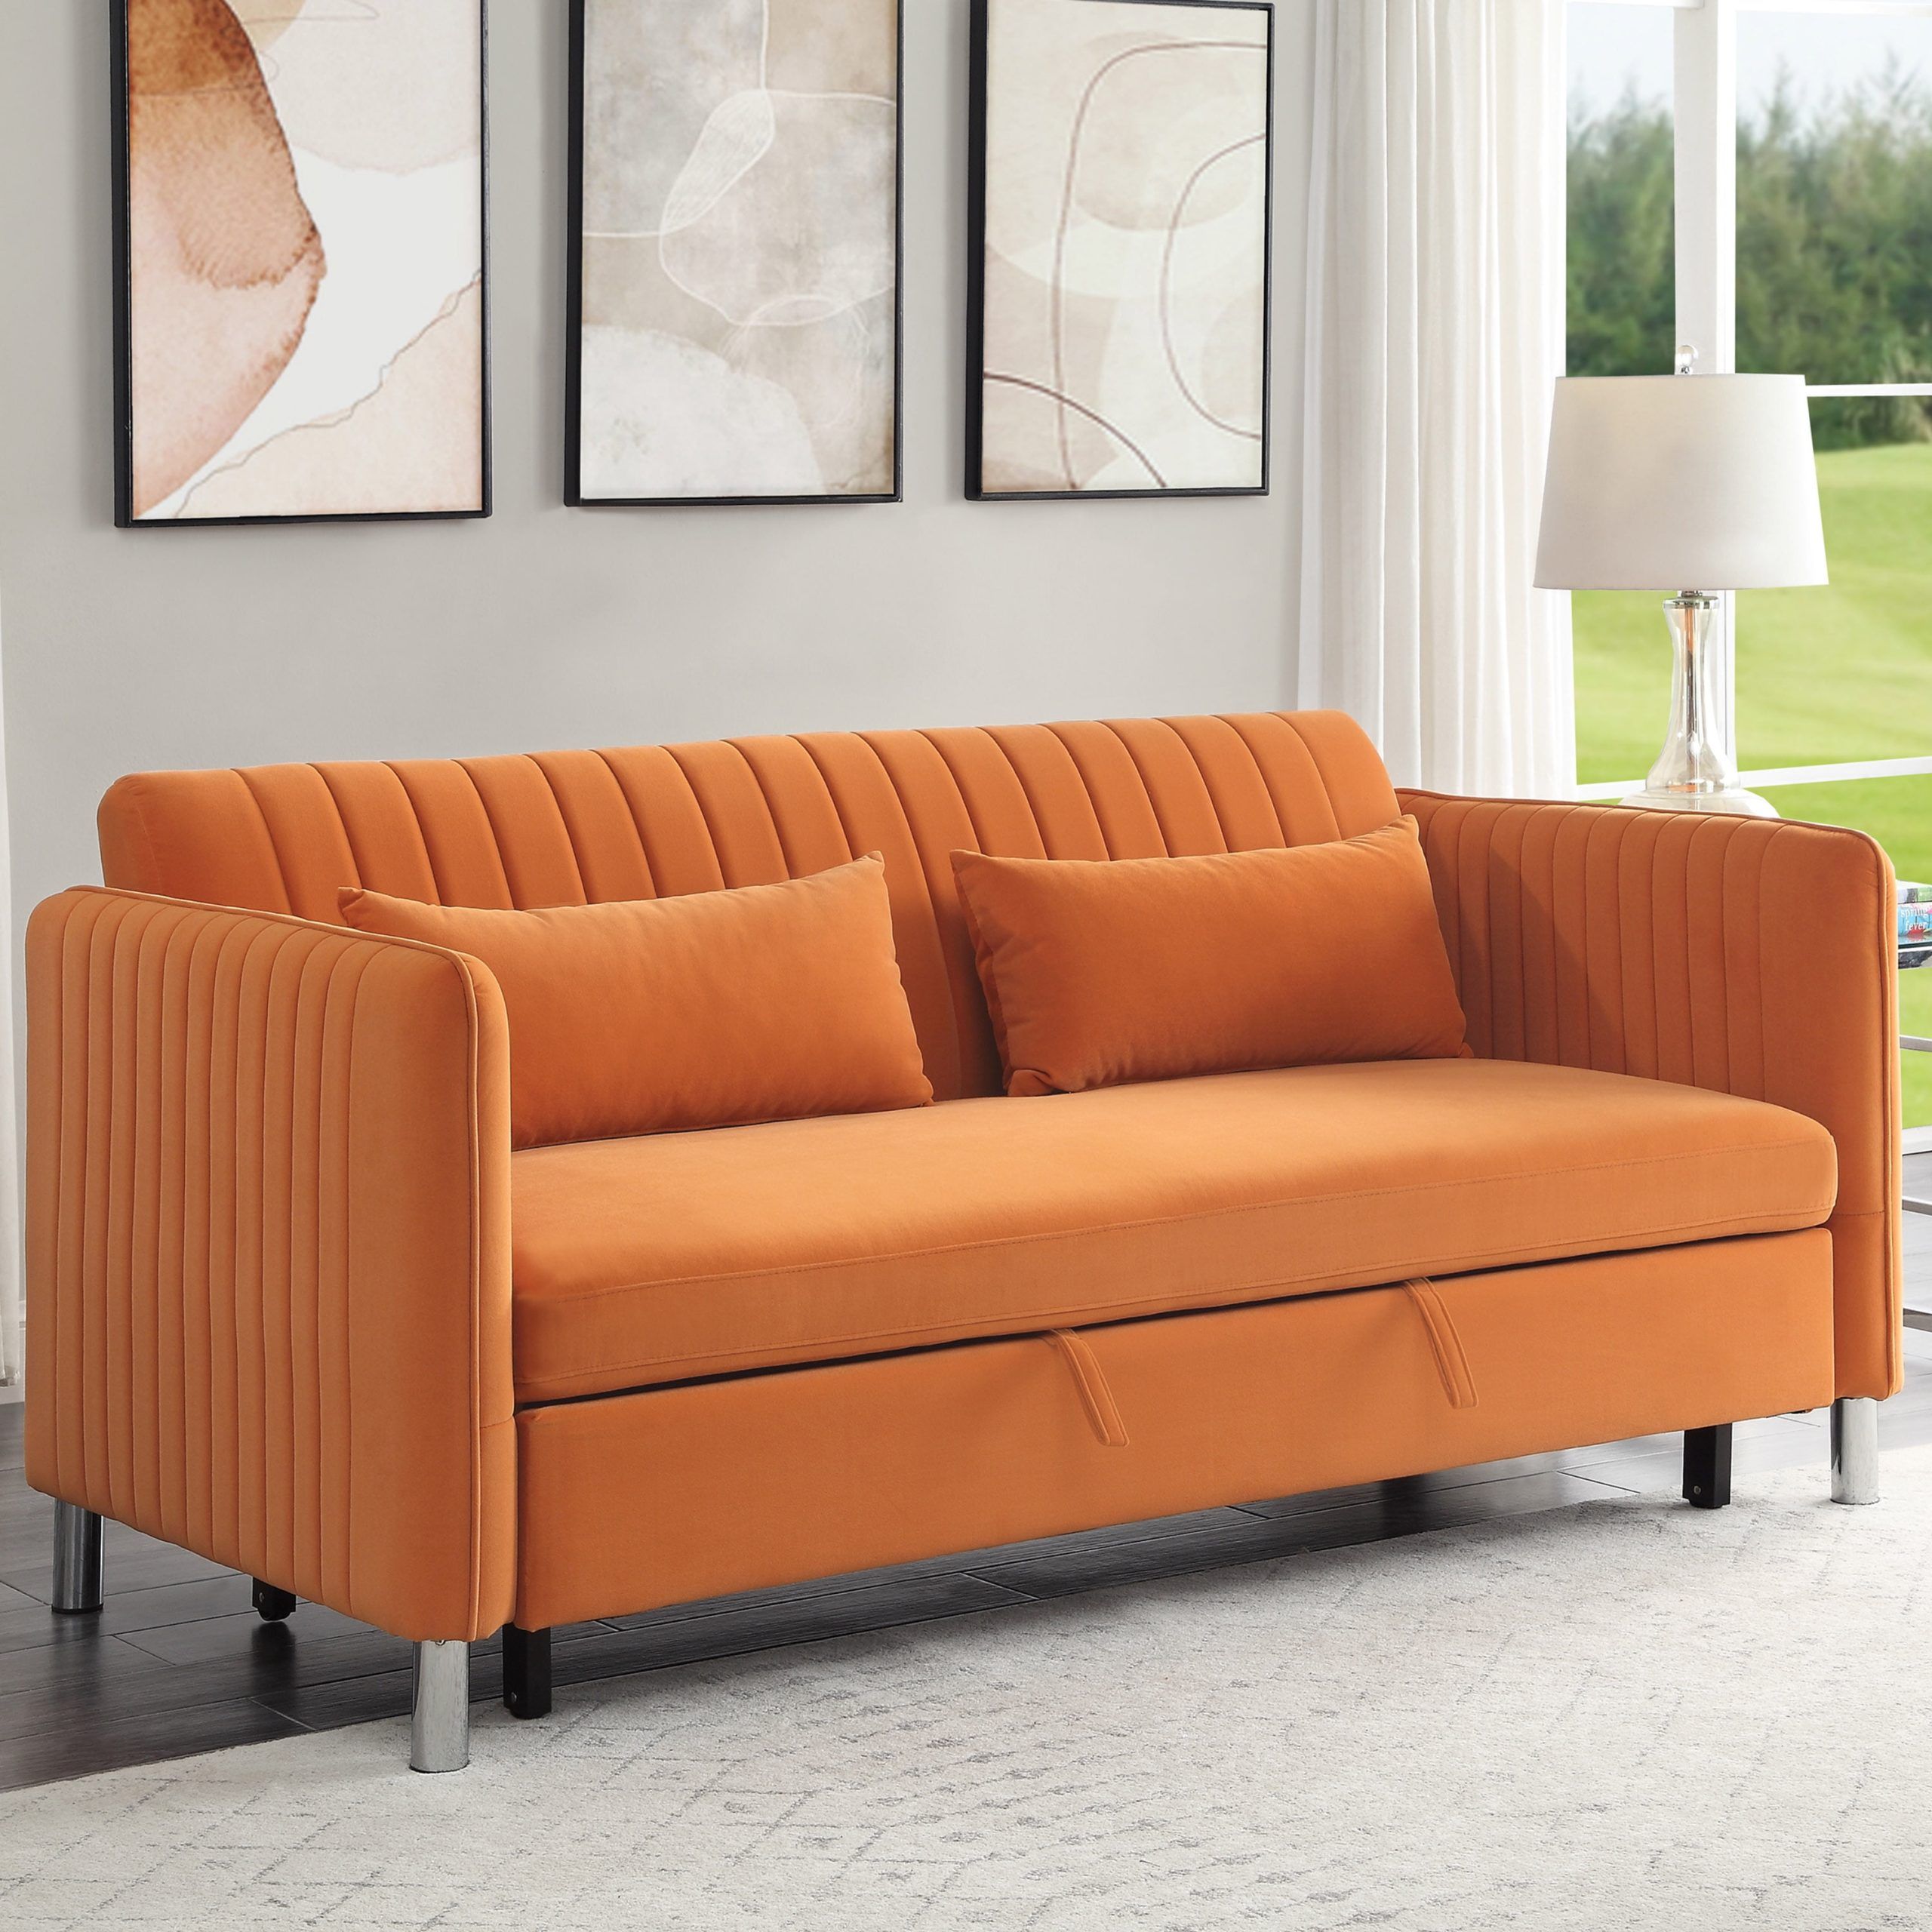 Lexiconhome Greenway Velvet Convertible Sofa Bed, Orange – Walmart Throughout 66" Convertible Velvet Sofa Beds (View 5 of 20)